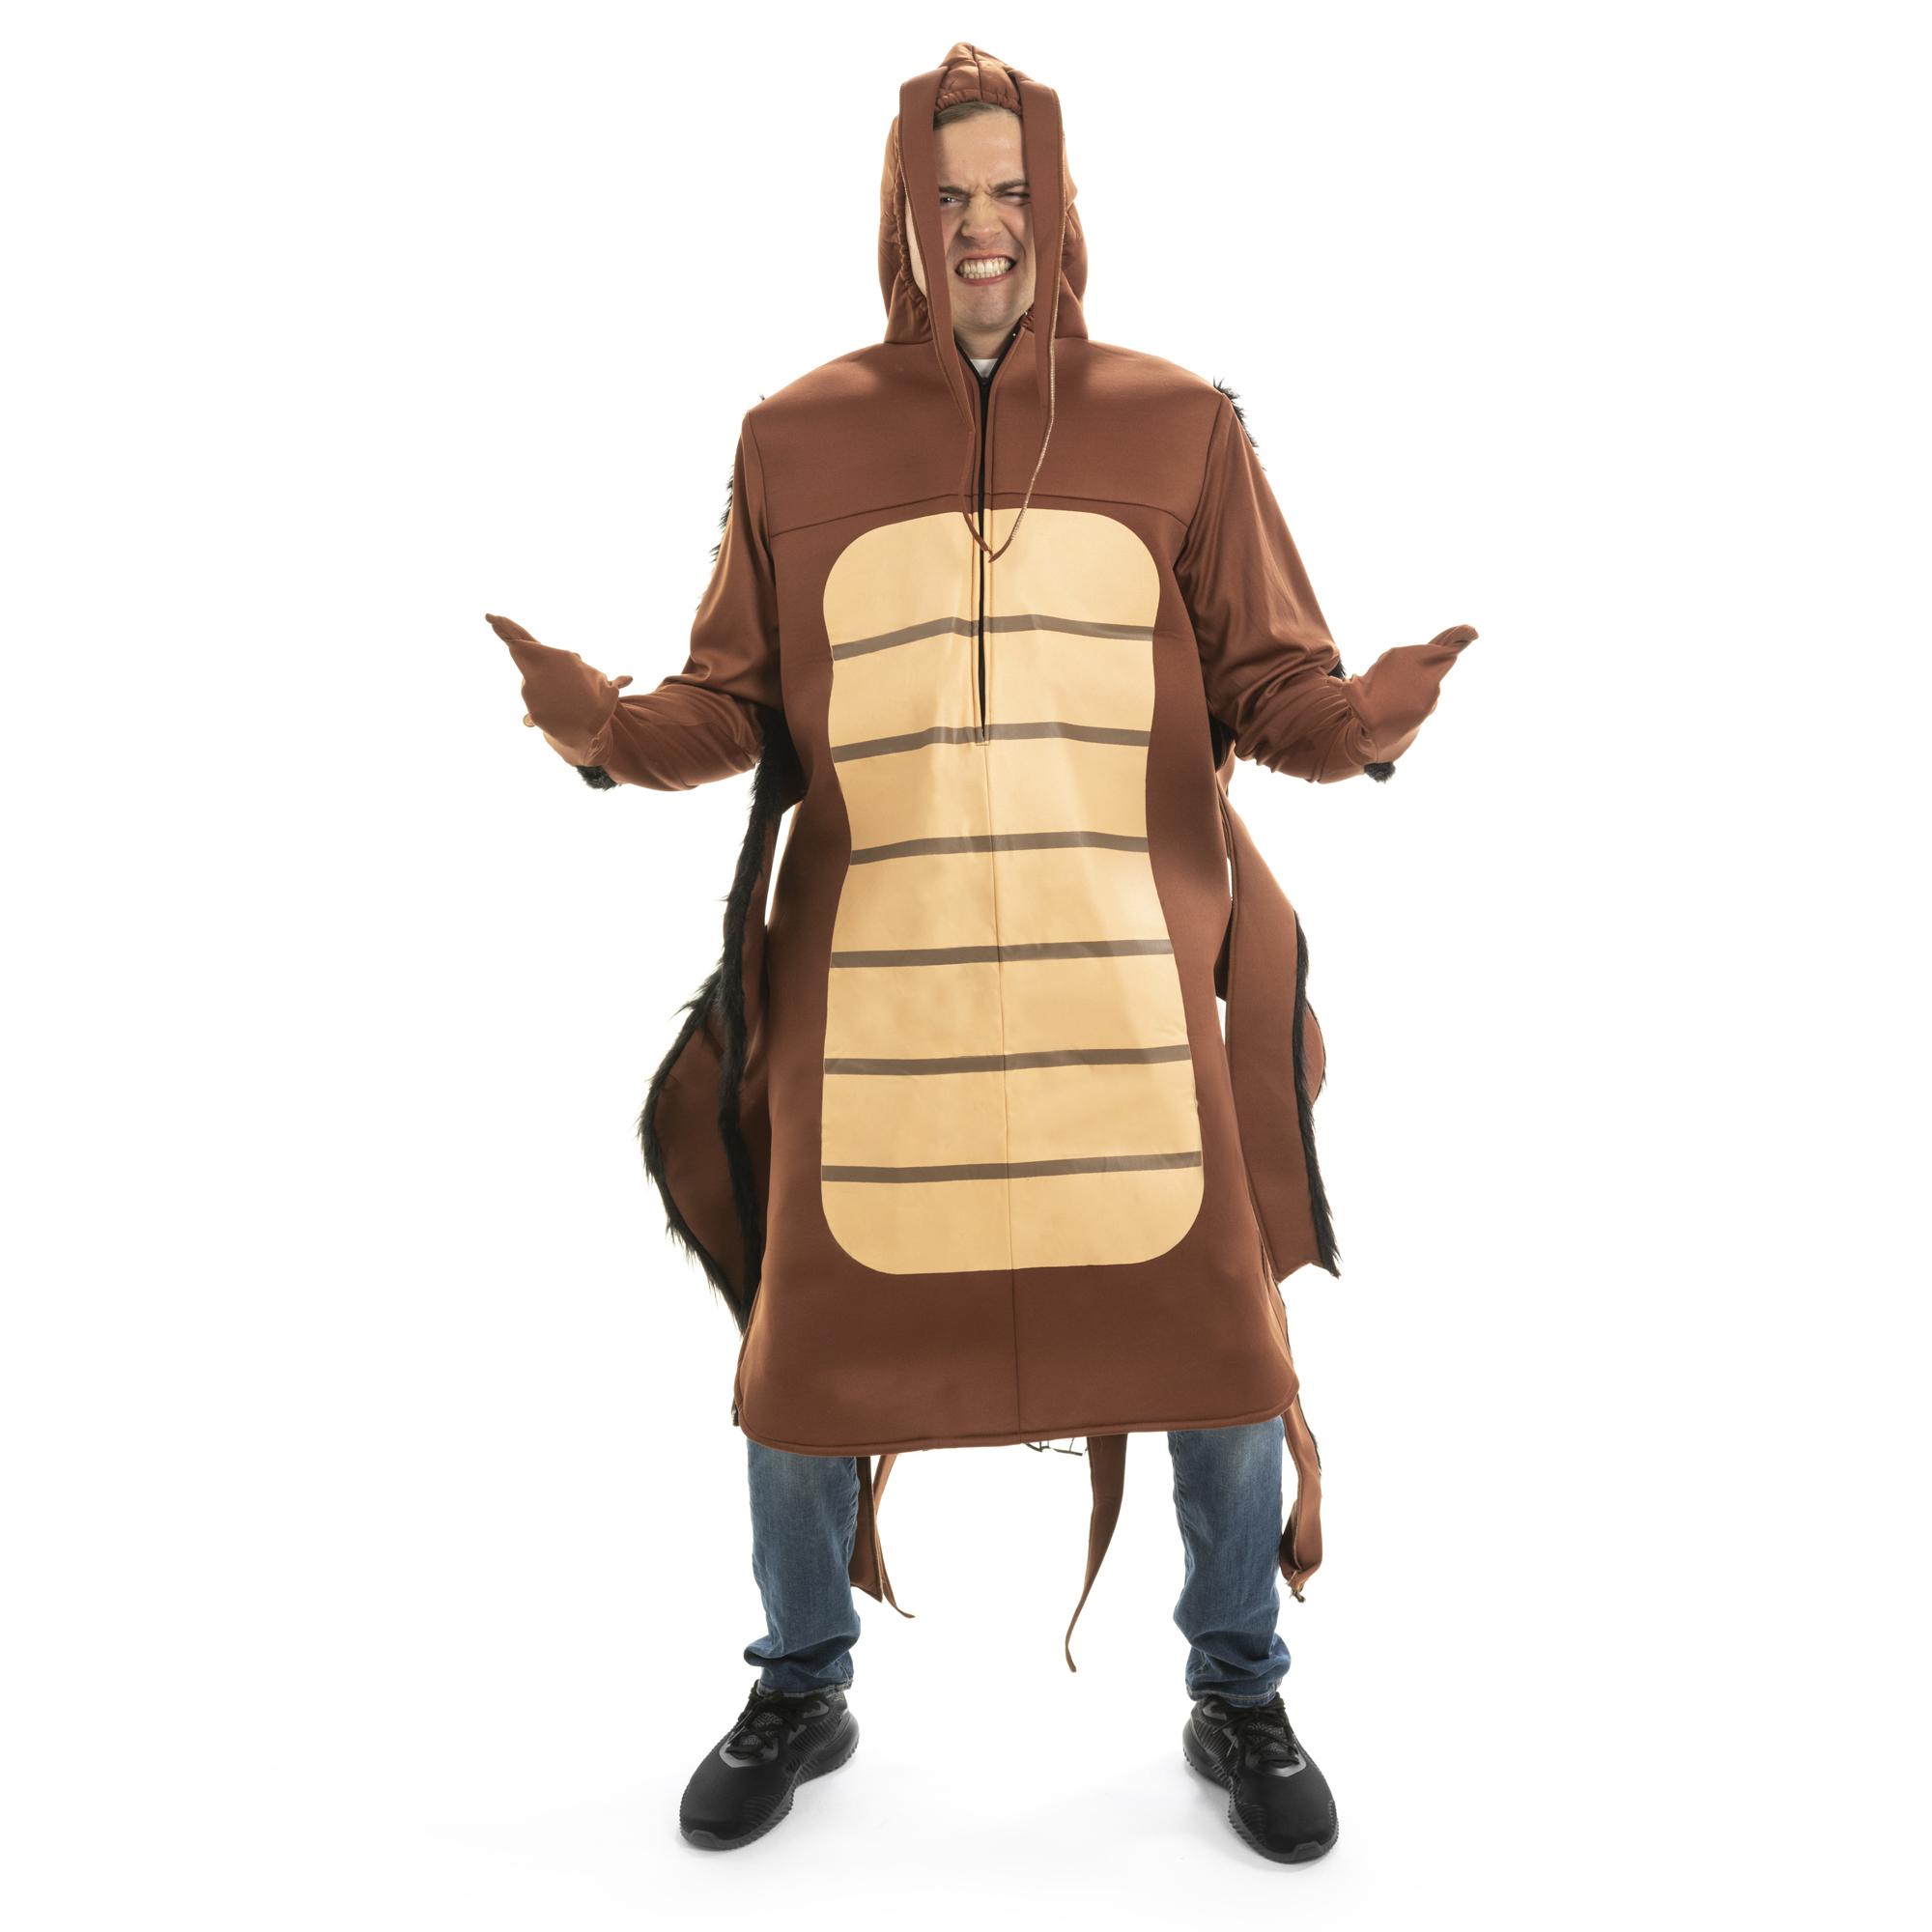 Creepy Cockroach Costume